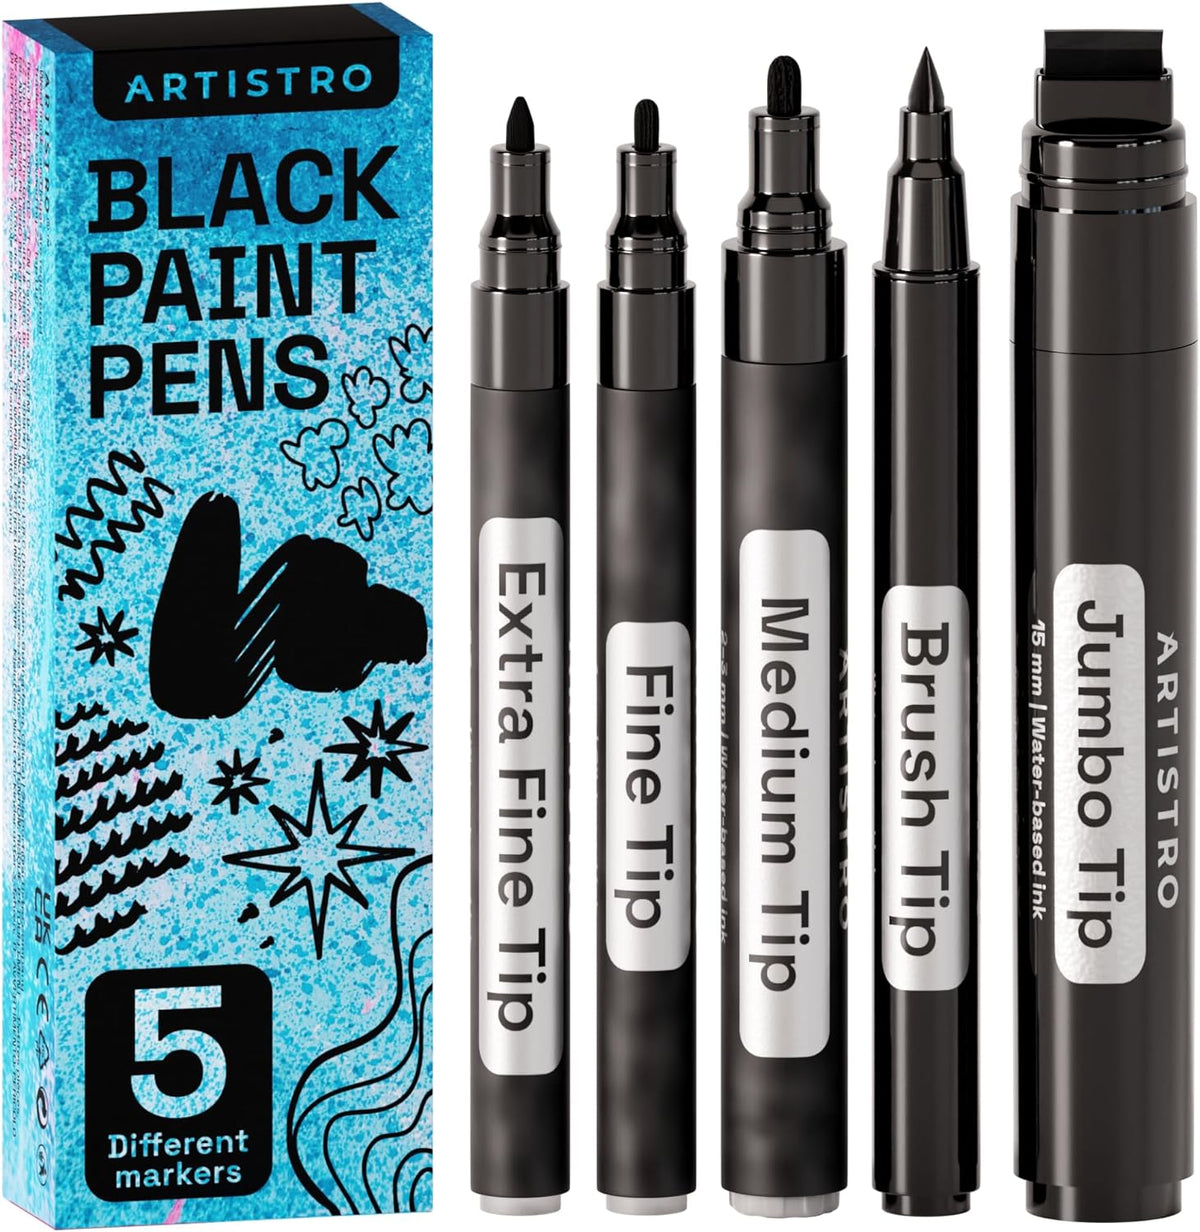 Brush Tip Markers: Paint Brush Pens & Brush Tipped Pen sets